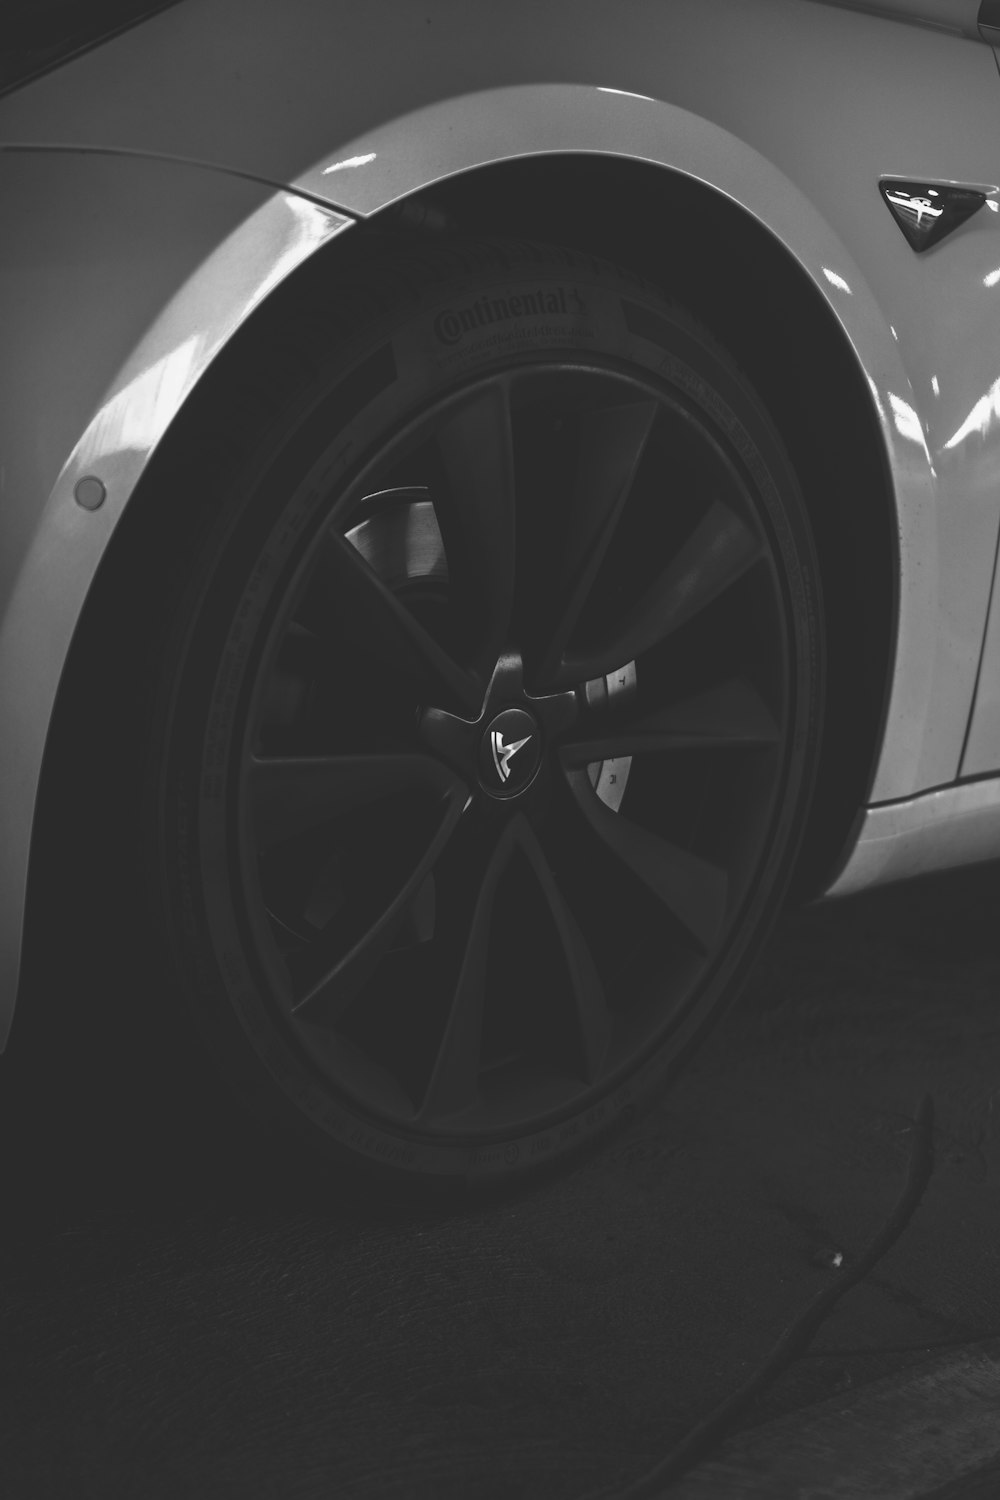 black multi-spoke vehicle wheels and tire